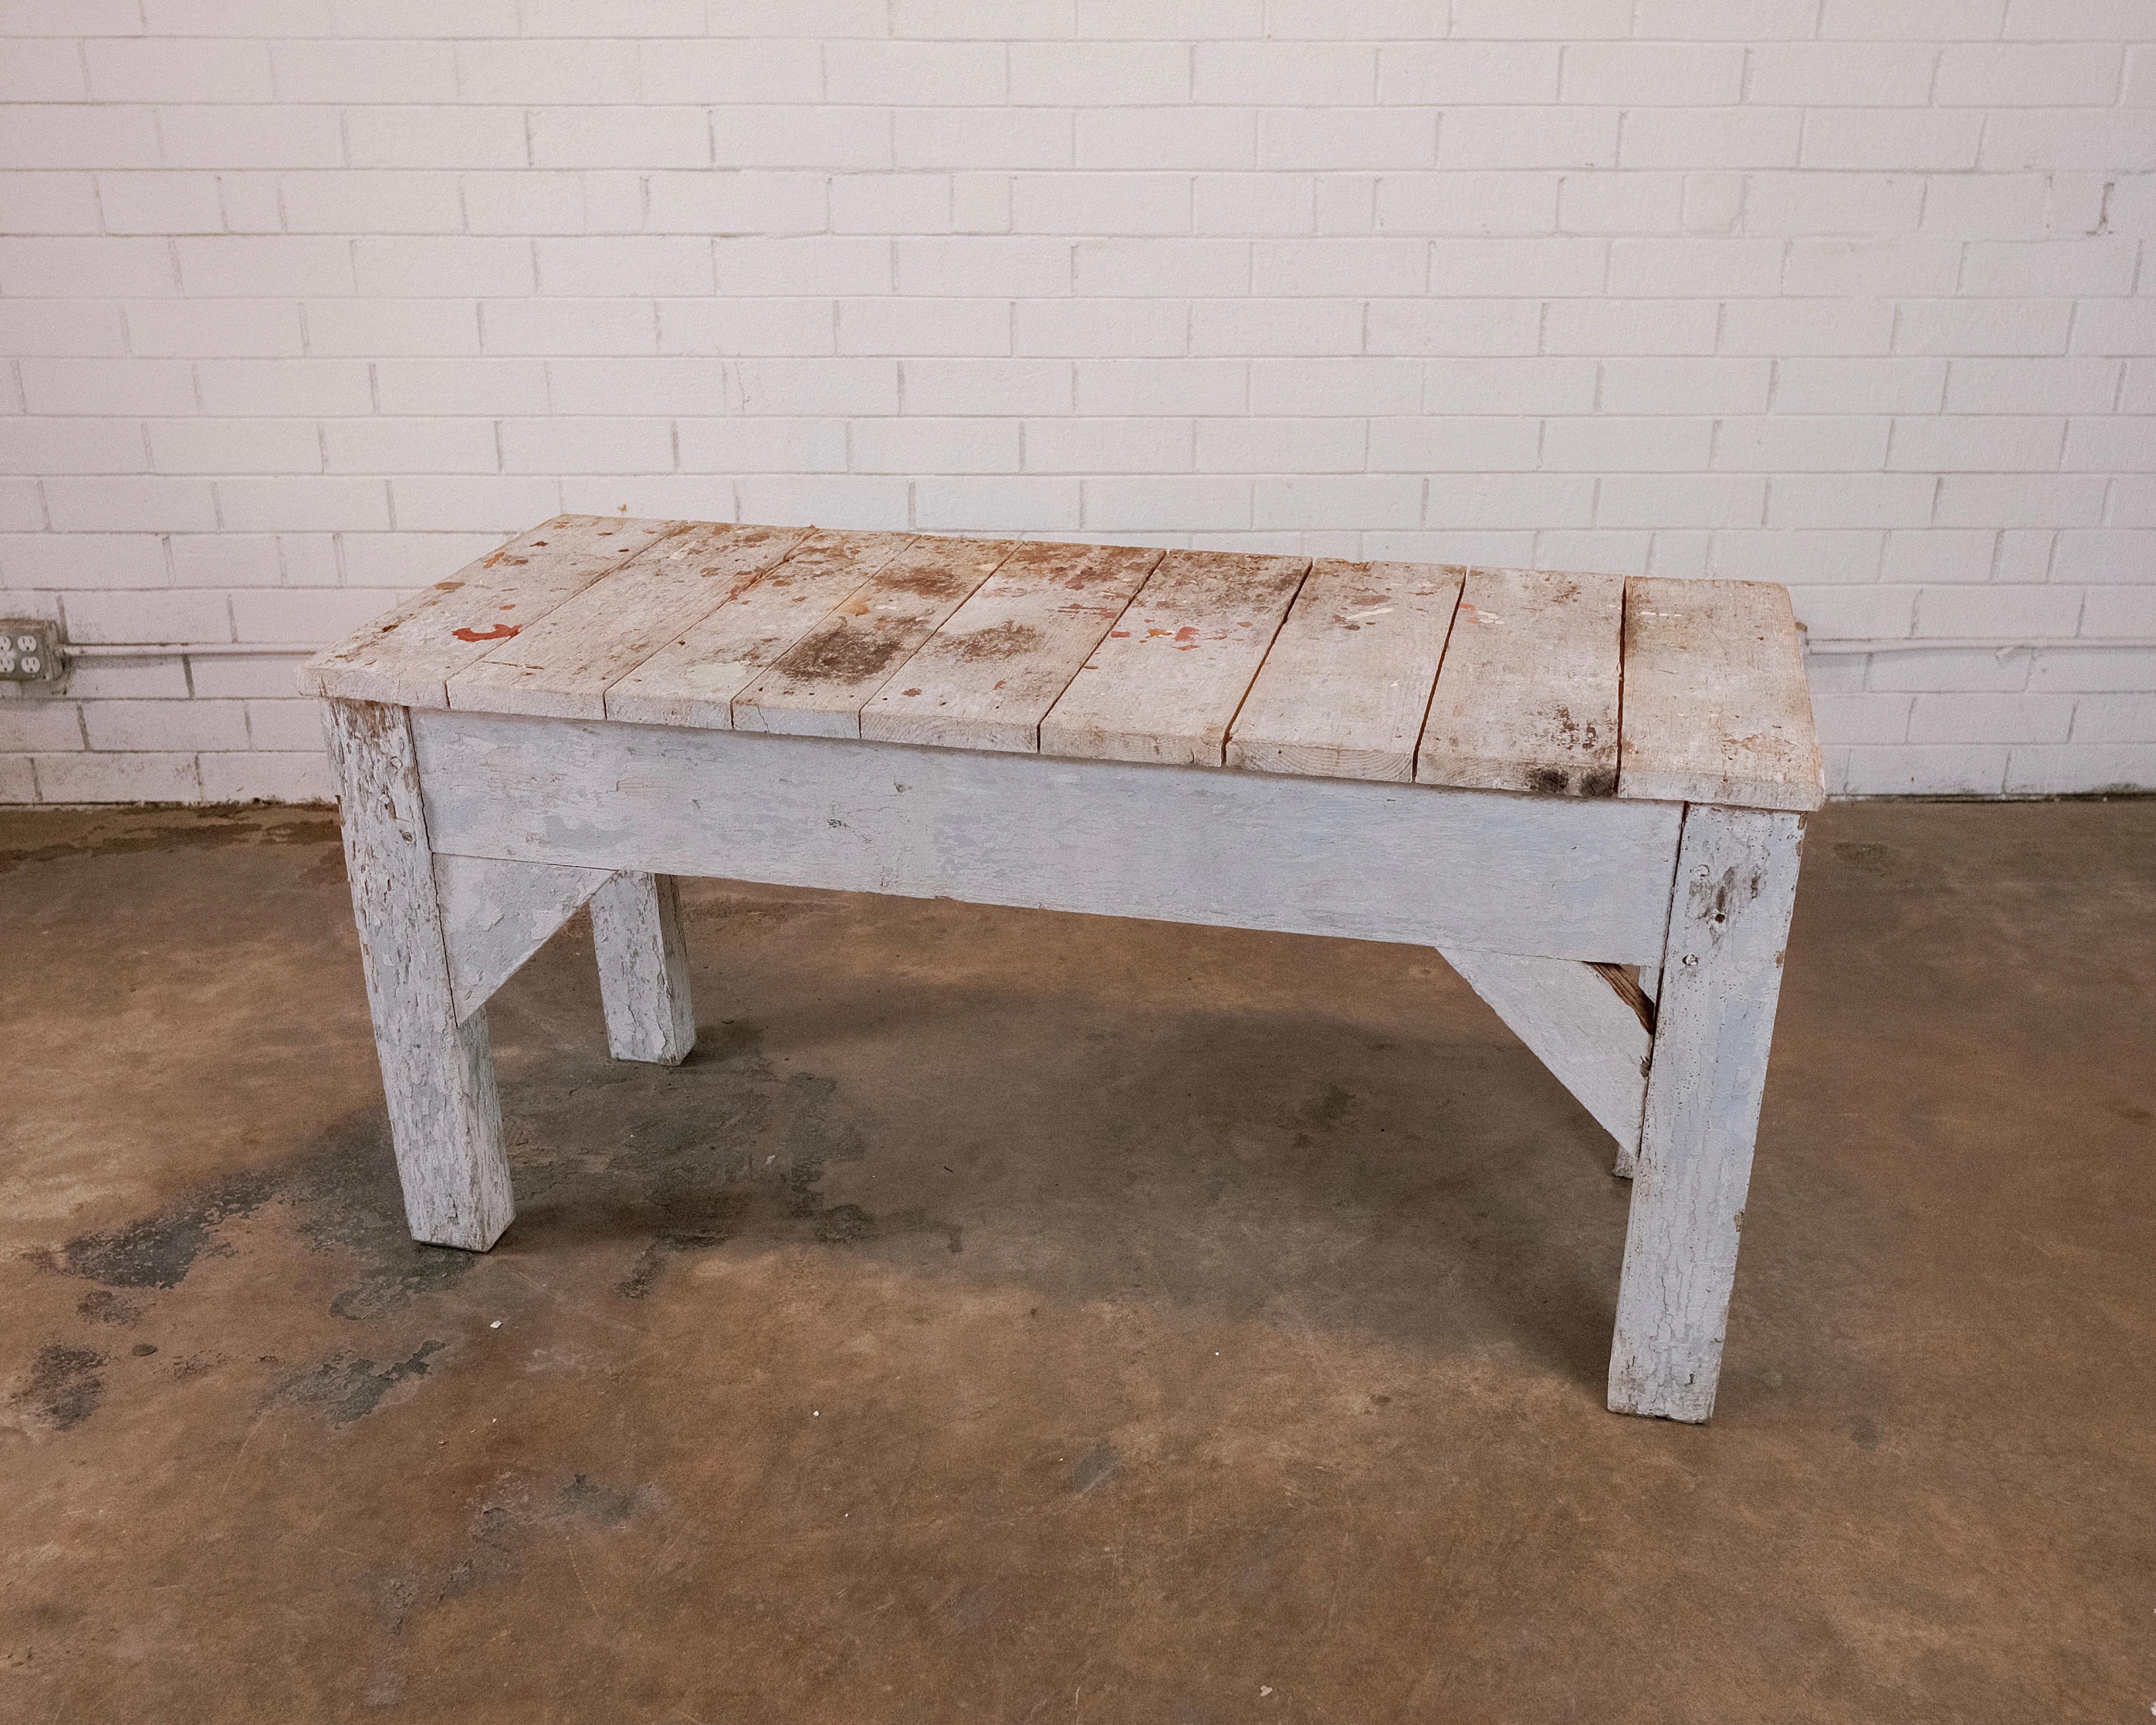 Wood Primitive Painted Blue Workshop Table For Sale